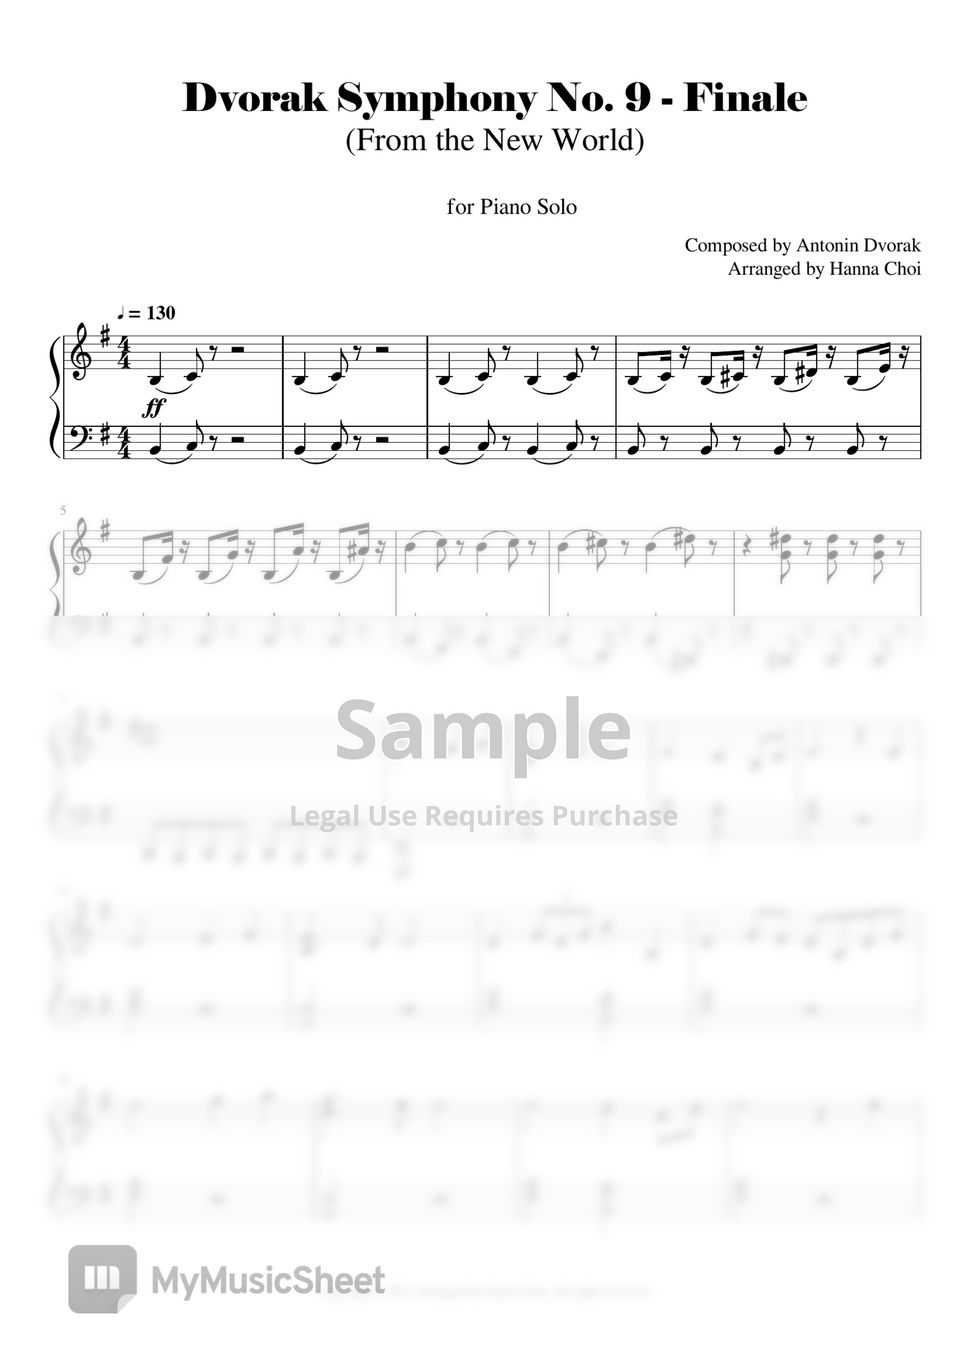 A.Dvorak 드보르작 - Symphony No.9 -Final (신세계로부터 교향곡 9번 ) (피아노 솔로)